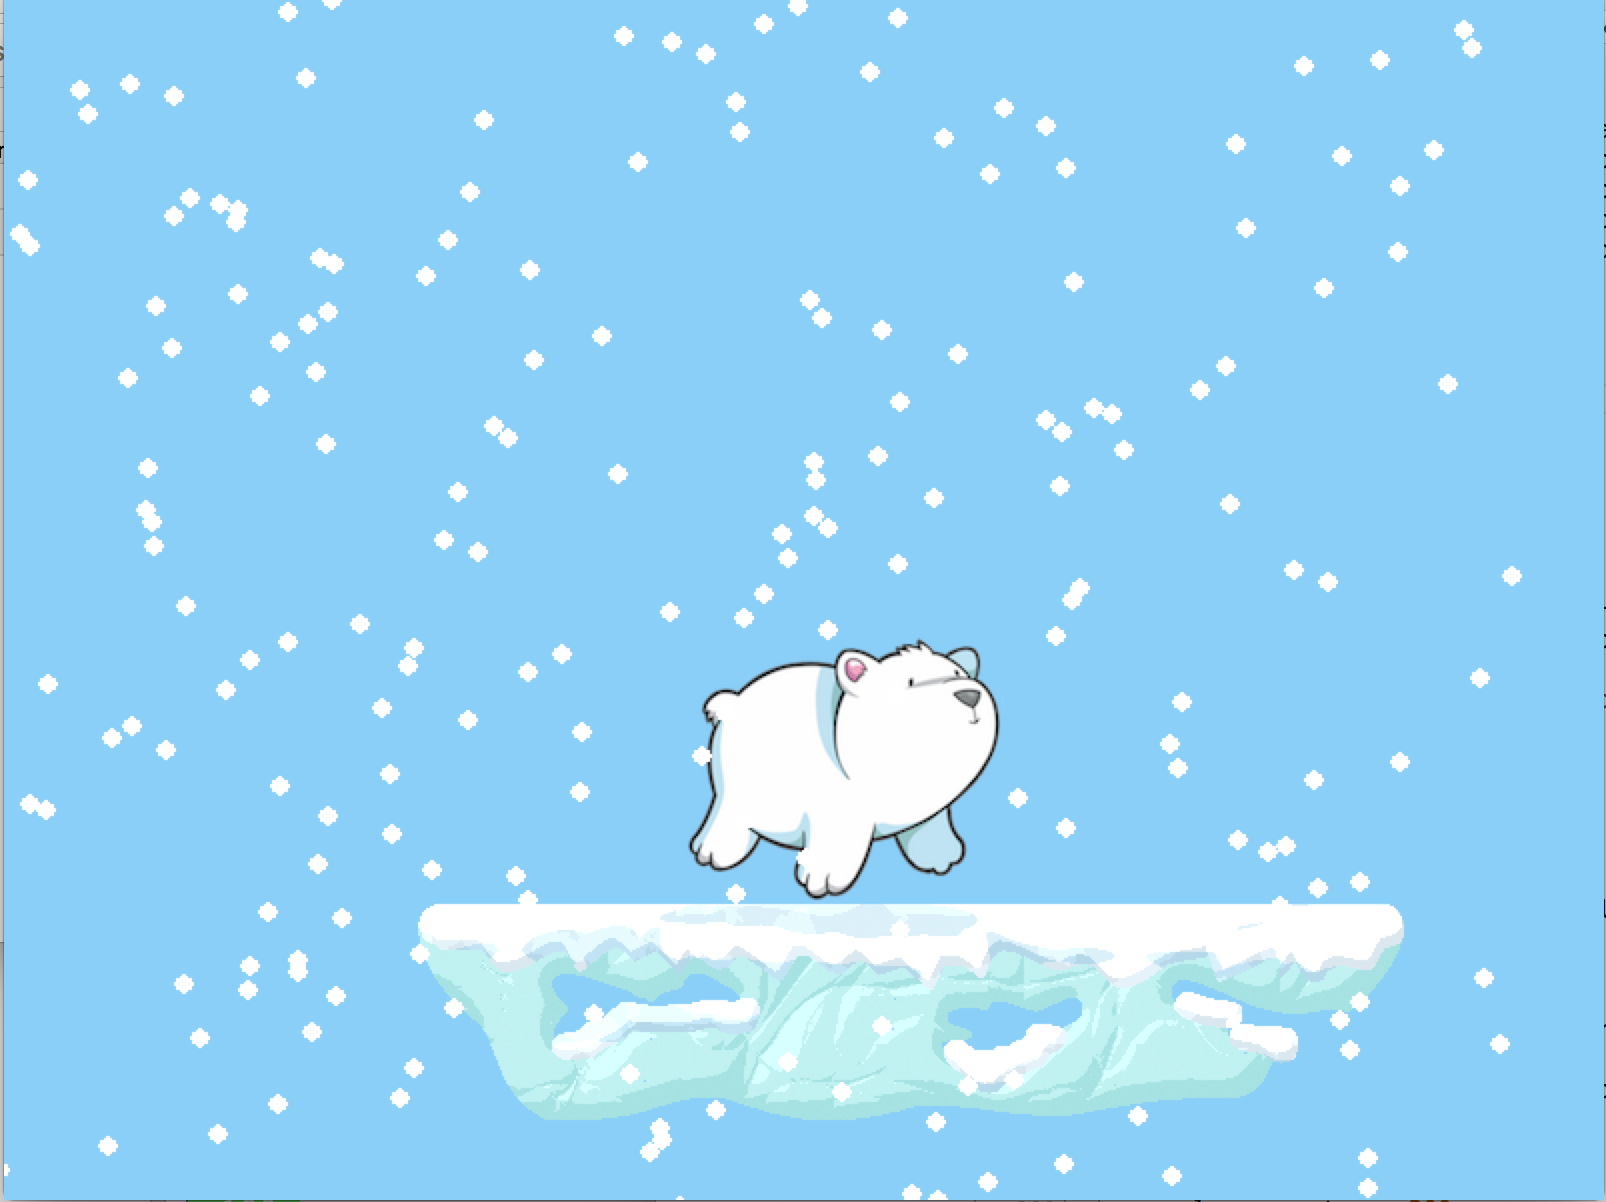 Polar Bear Run - A game by the Girls Who Code.